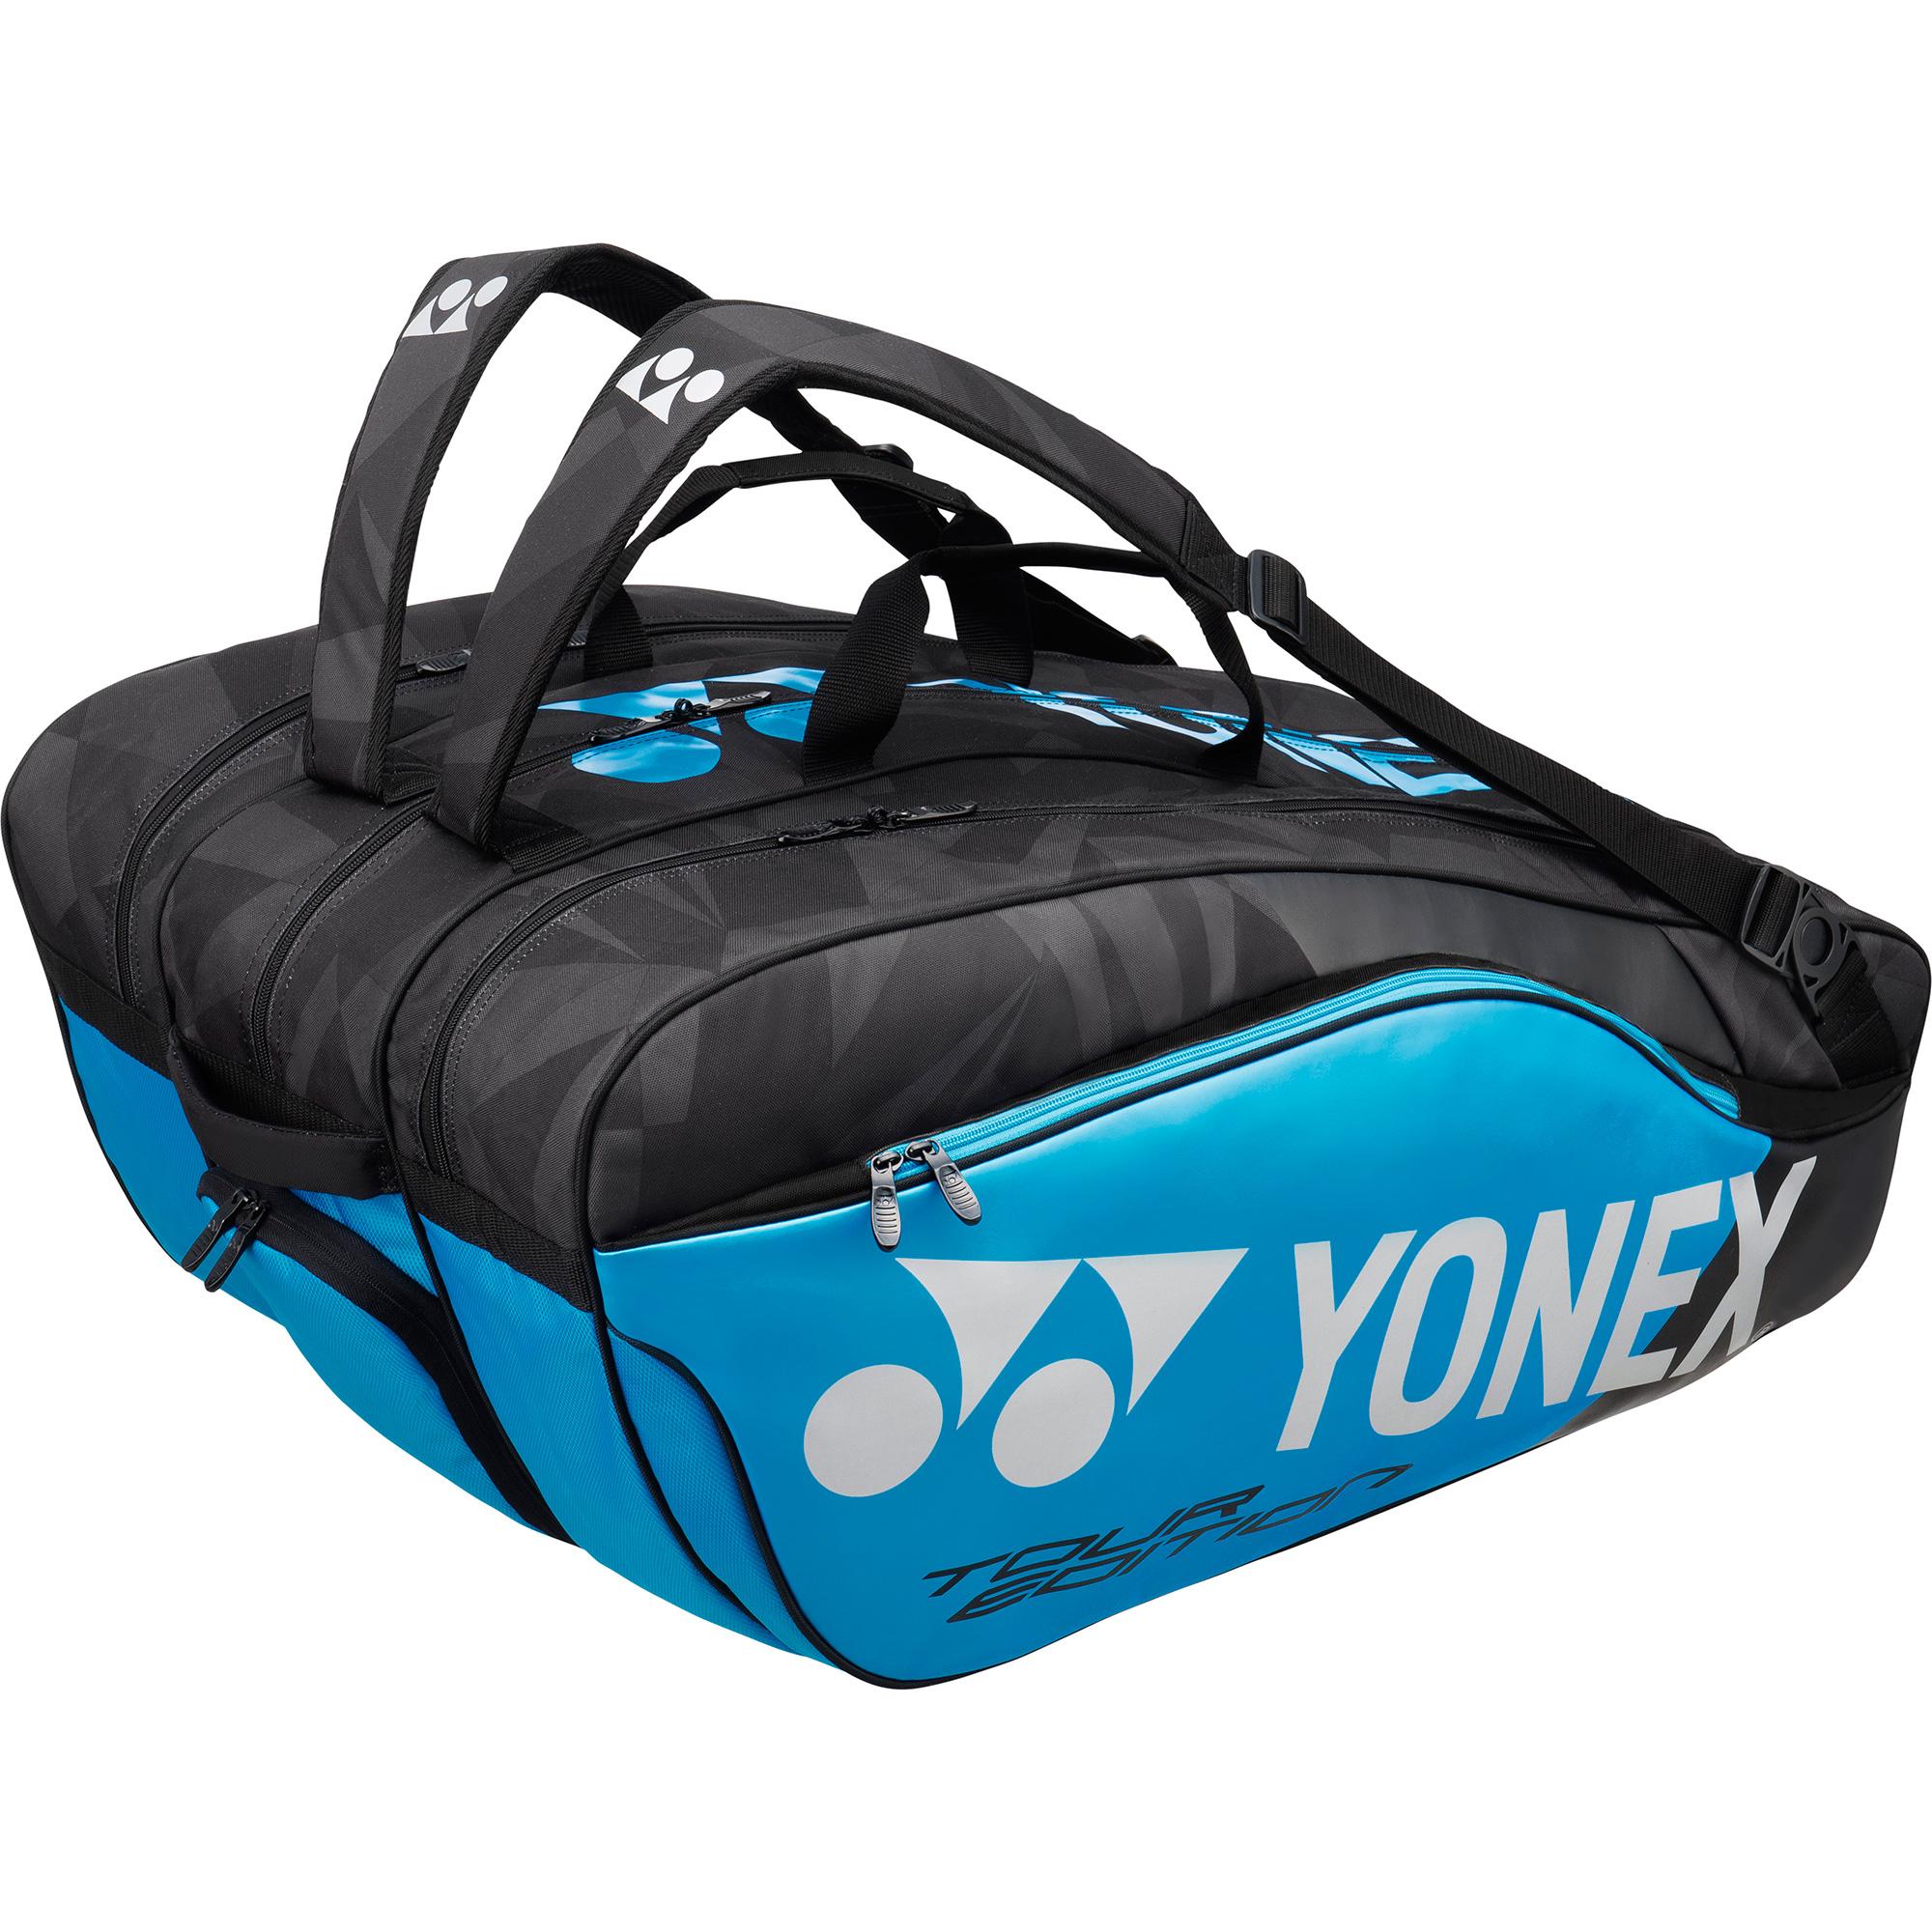 Yonex Pro Series 12-Pack Racquet Bag (Black/Infinite Blue)